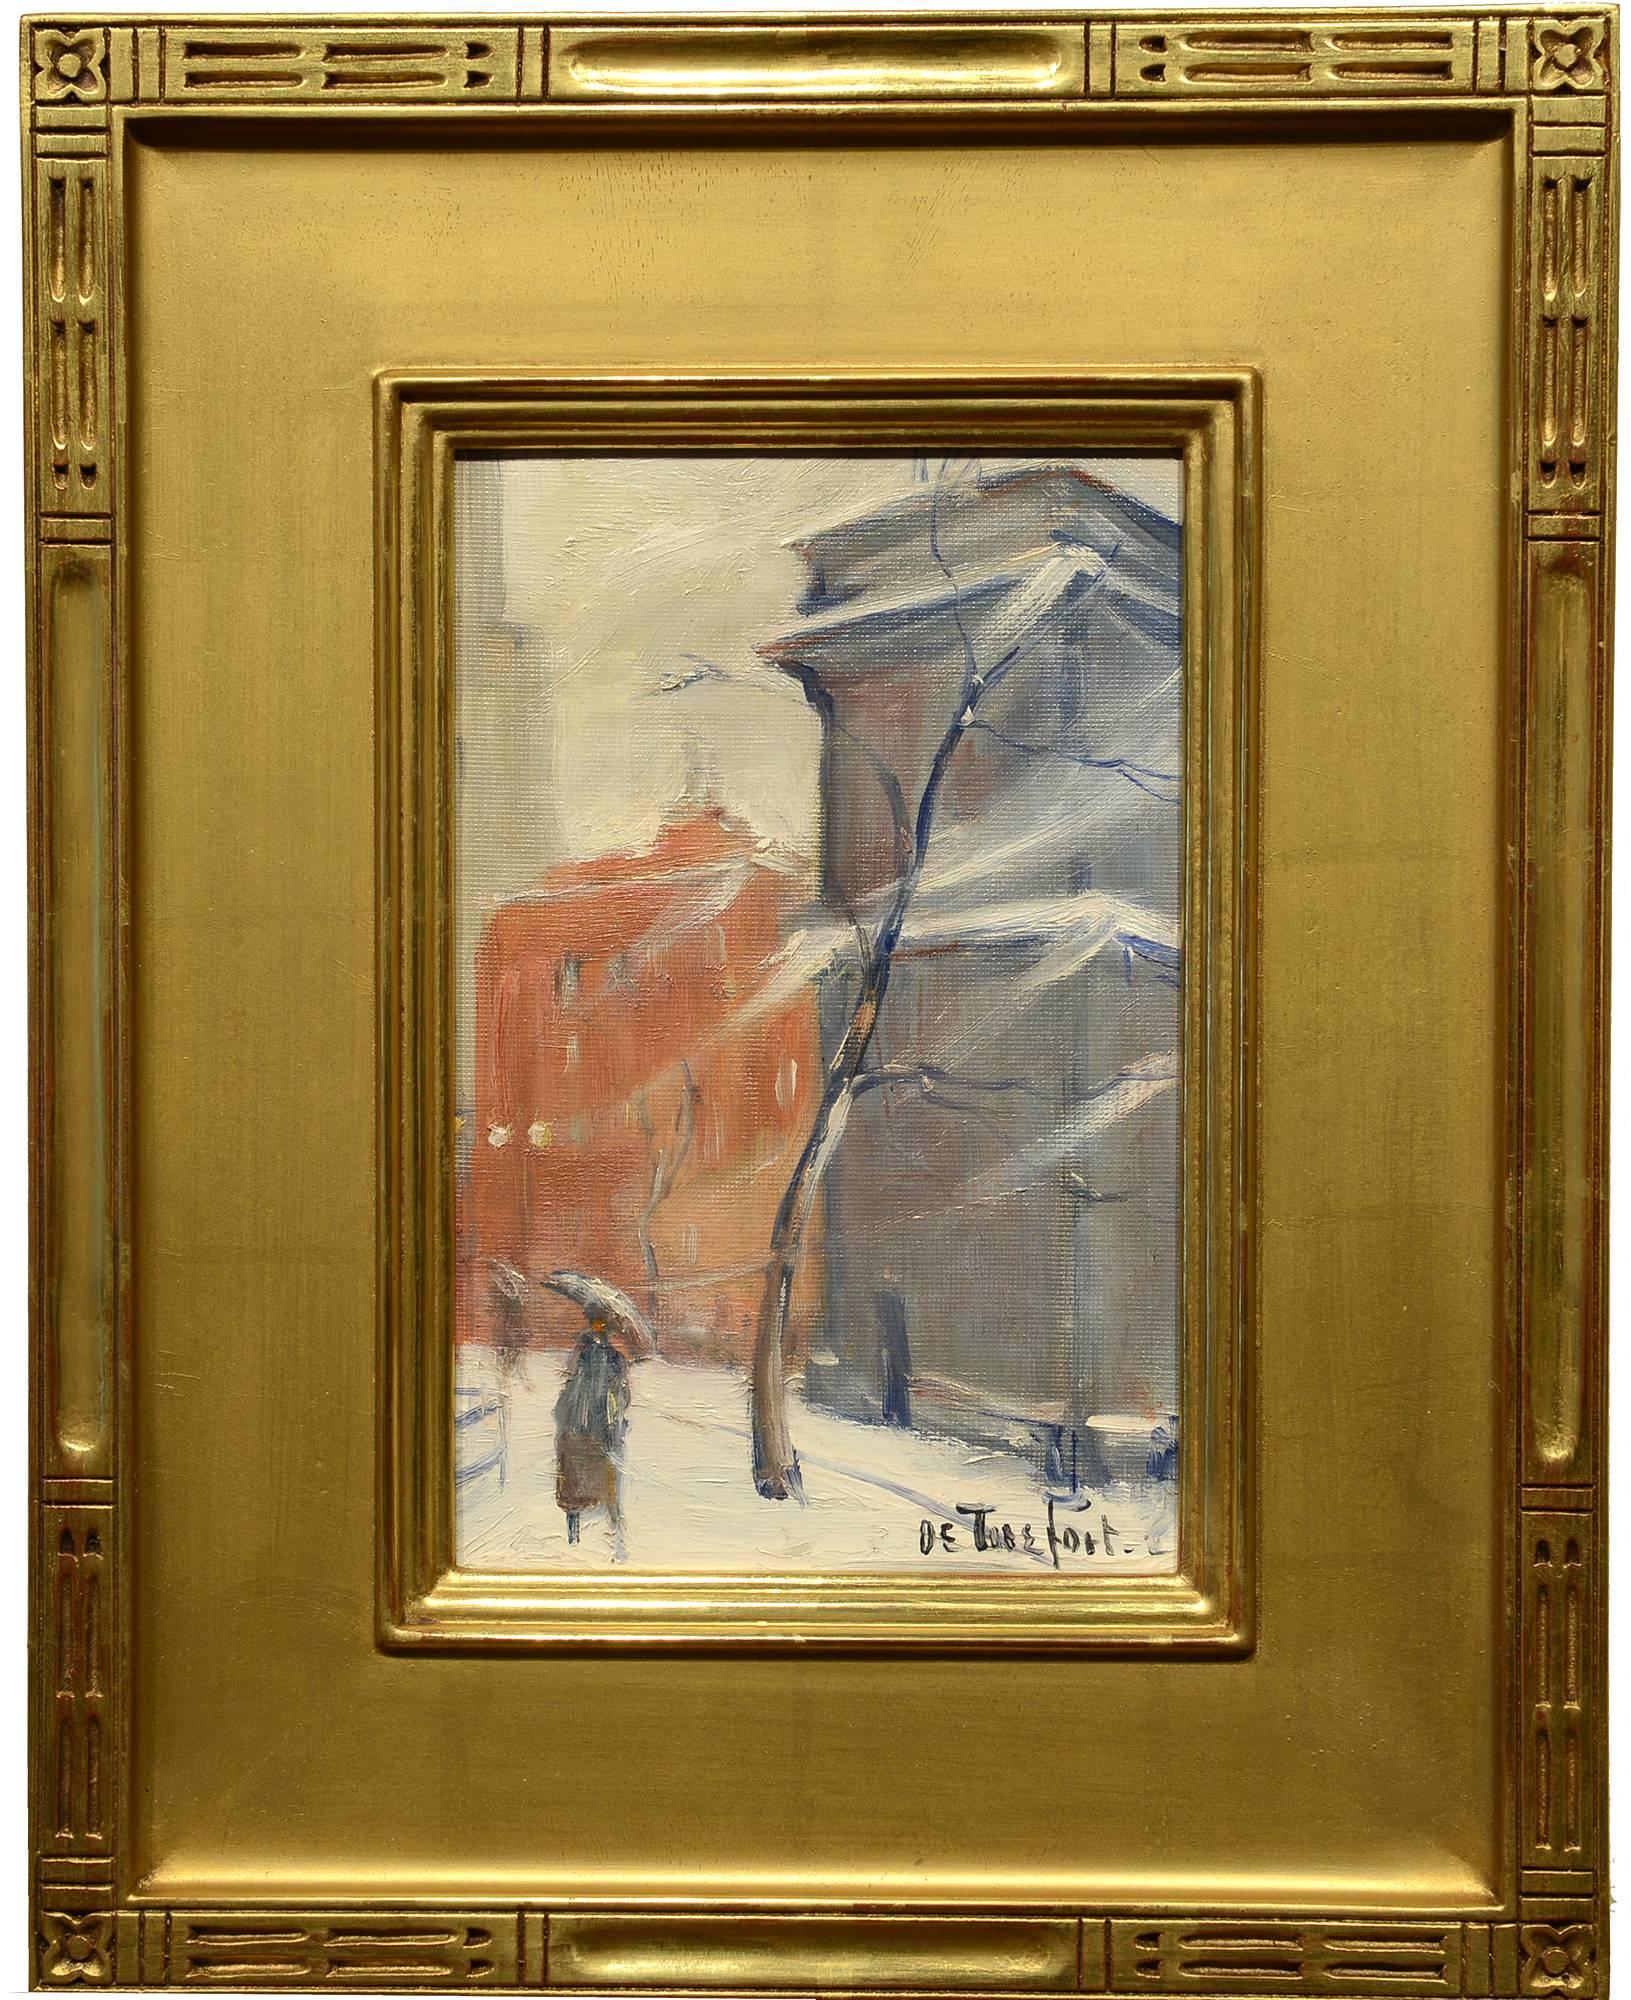 Winter, Washington Square - Painting by Bela DeTirefort